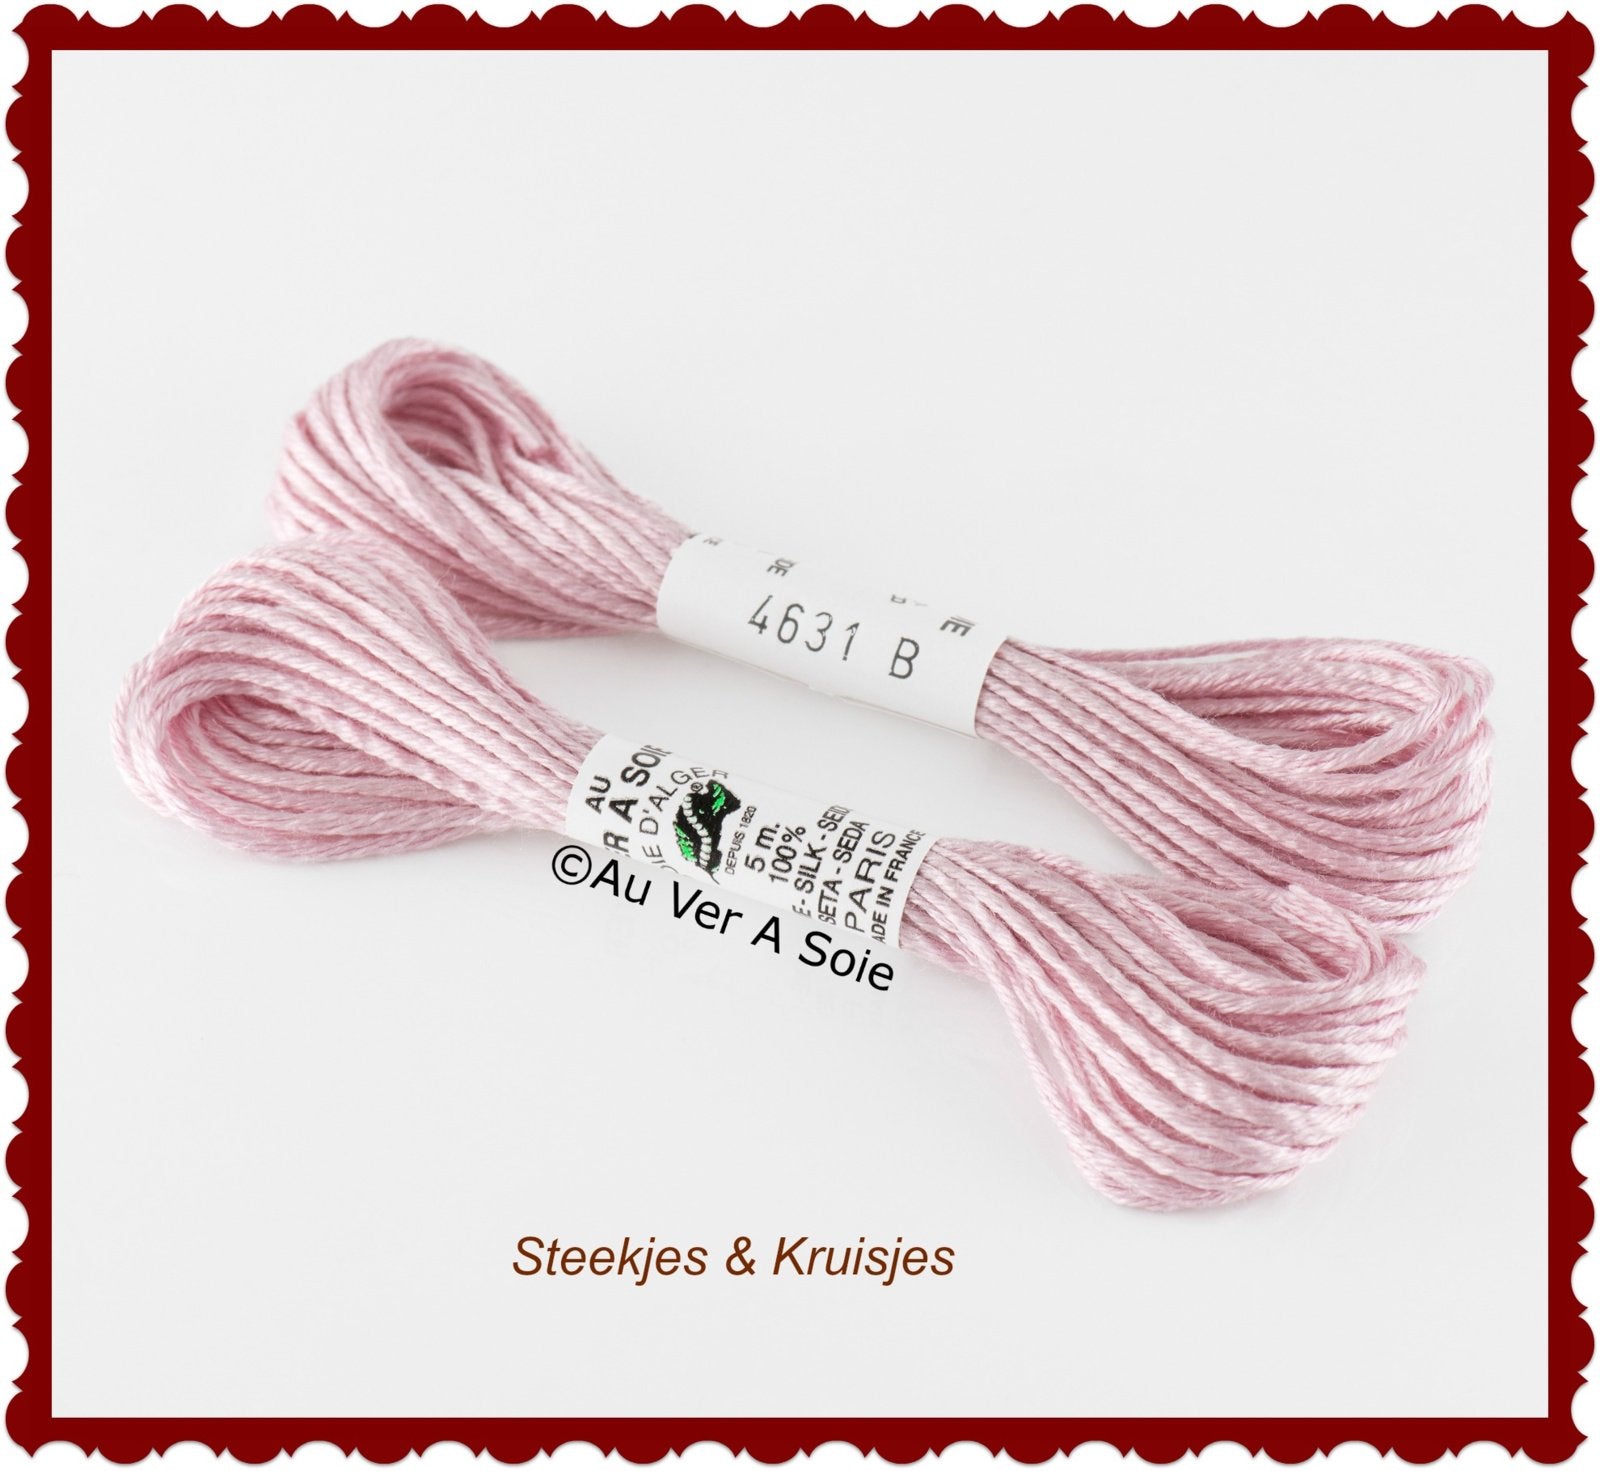 Au ver ie "soie d'alger" silk yarn color no. 4631